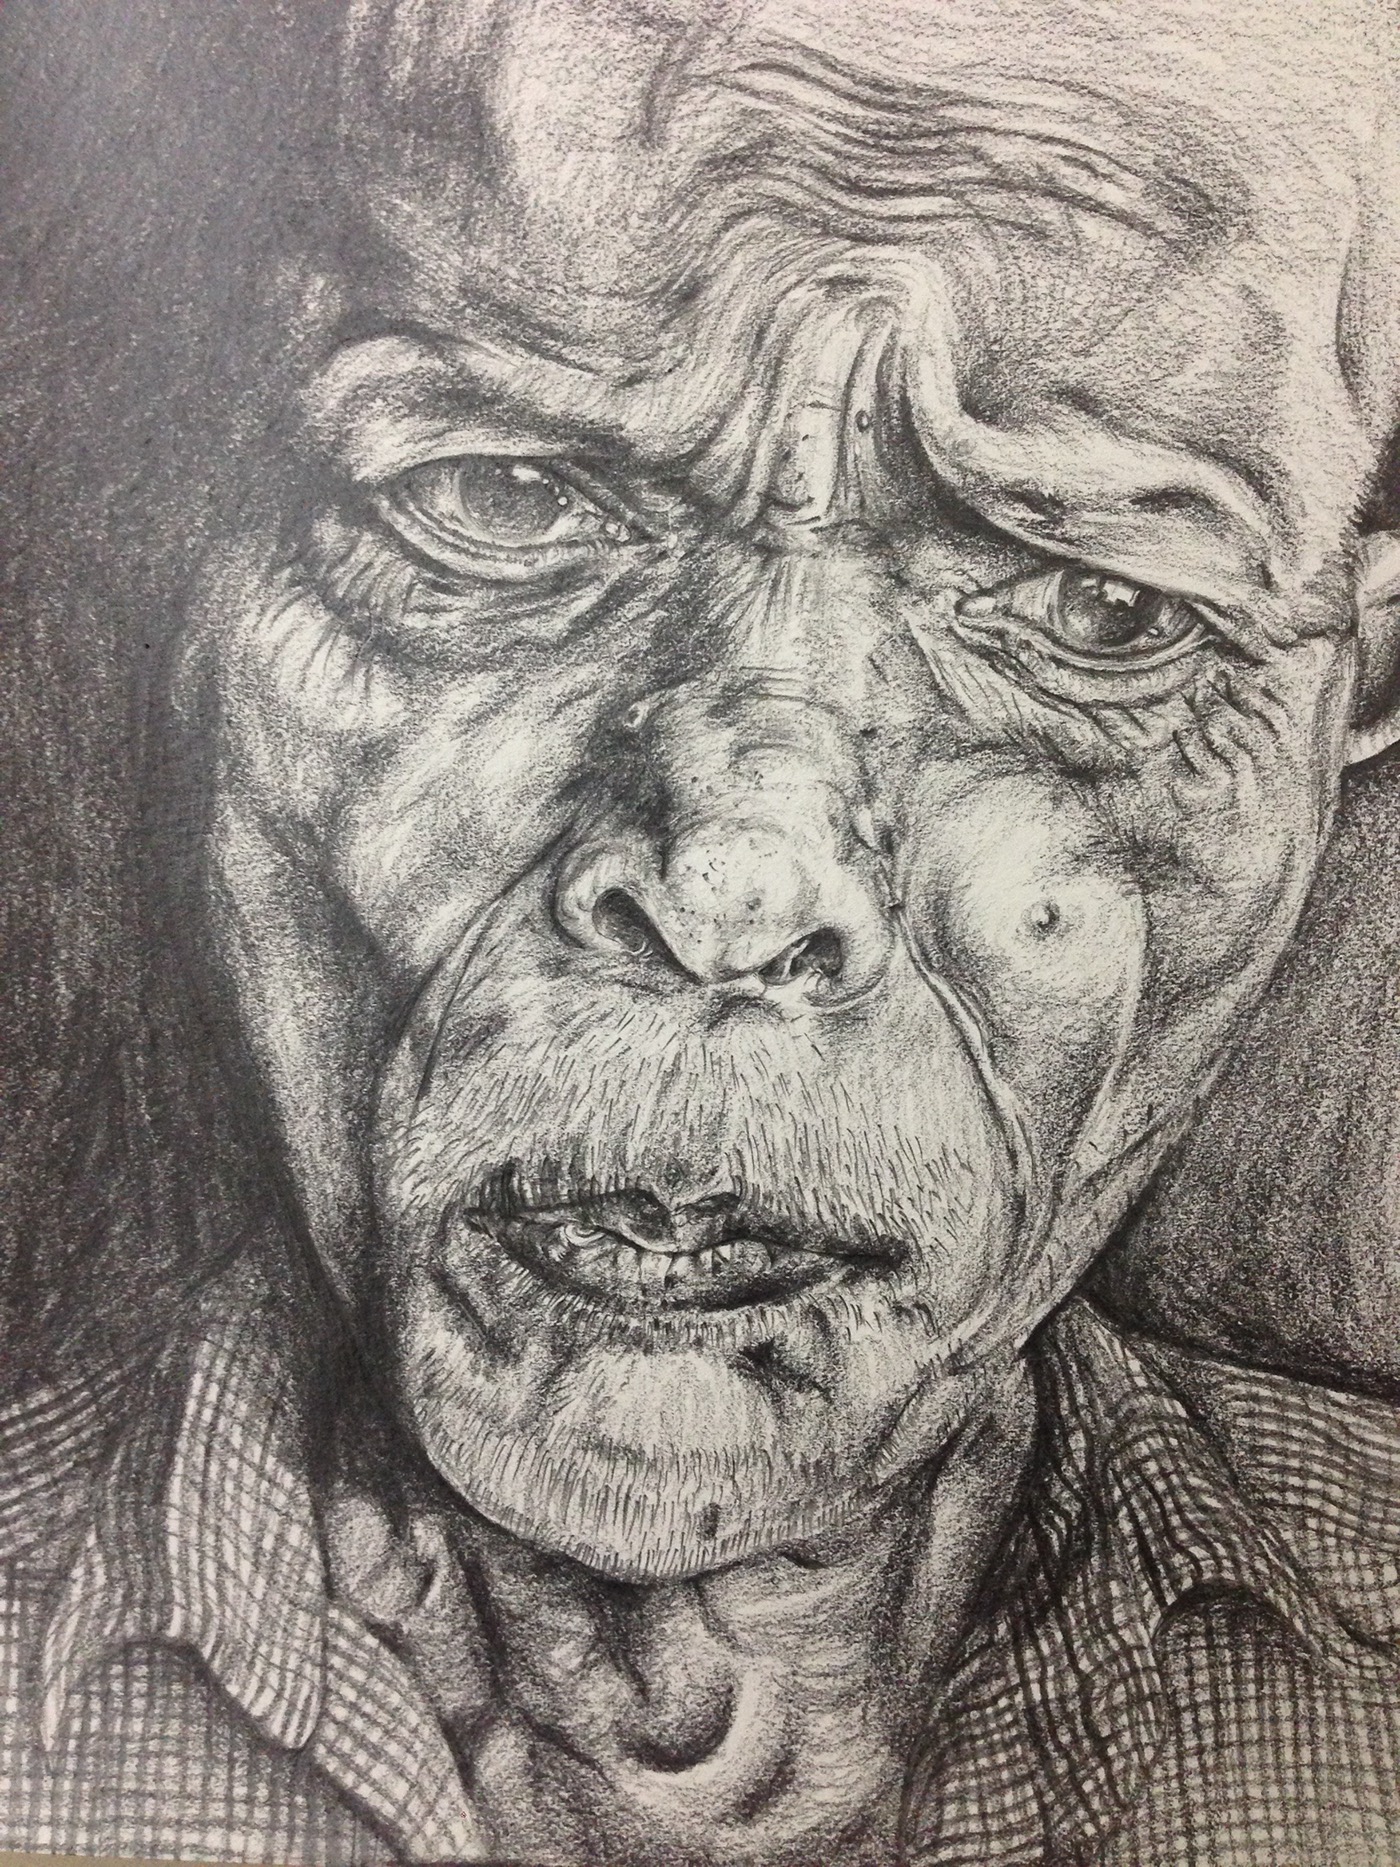 pencil sketch face study Old man Sketch pencil shading